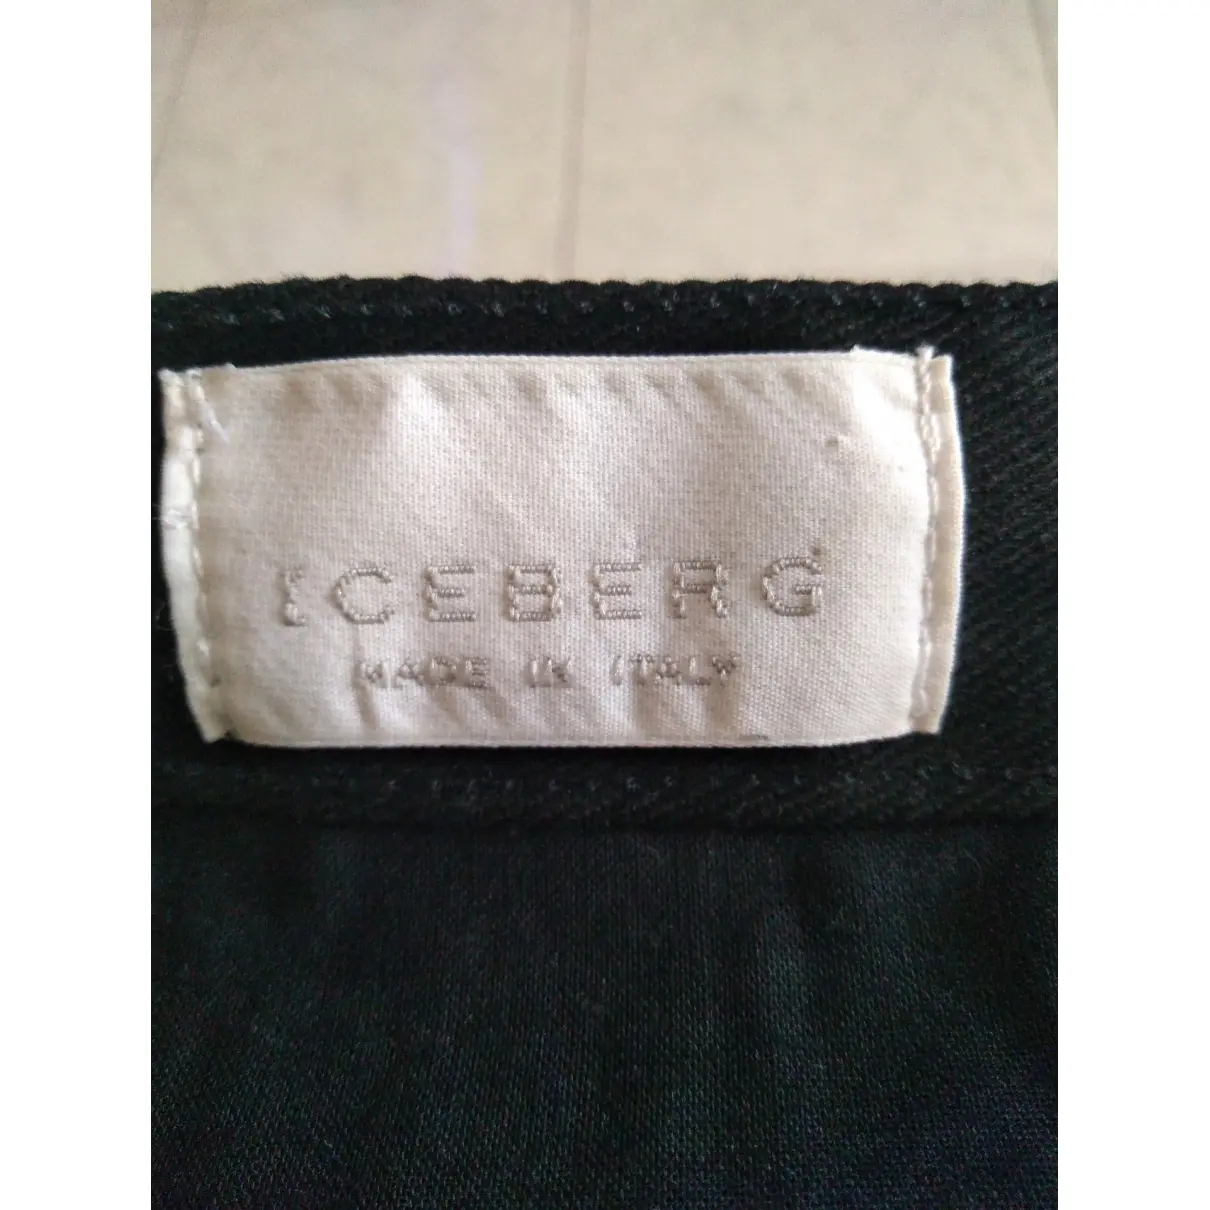 Buy Iceberg Large pants online